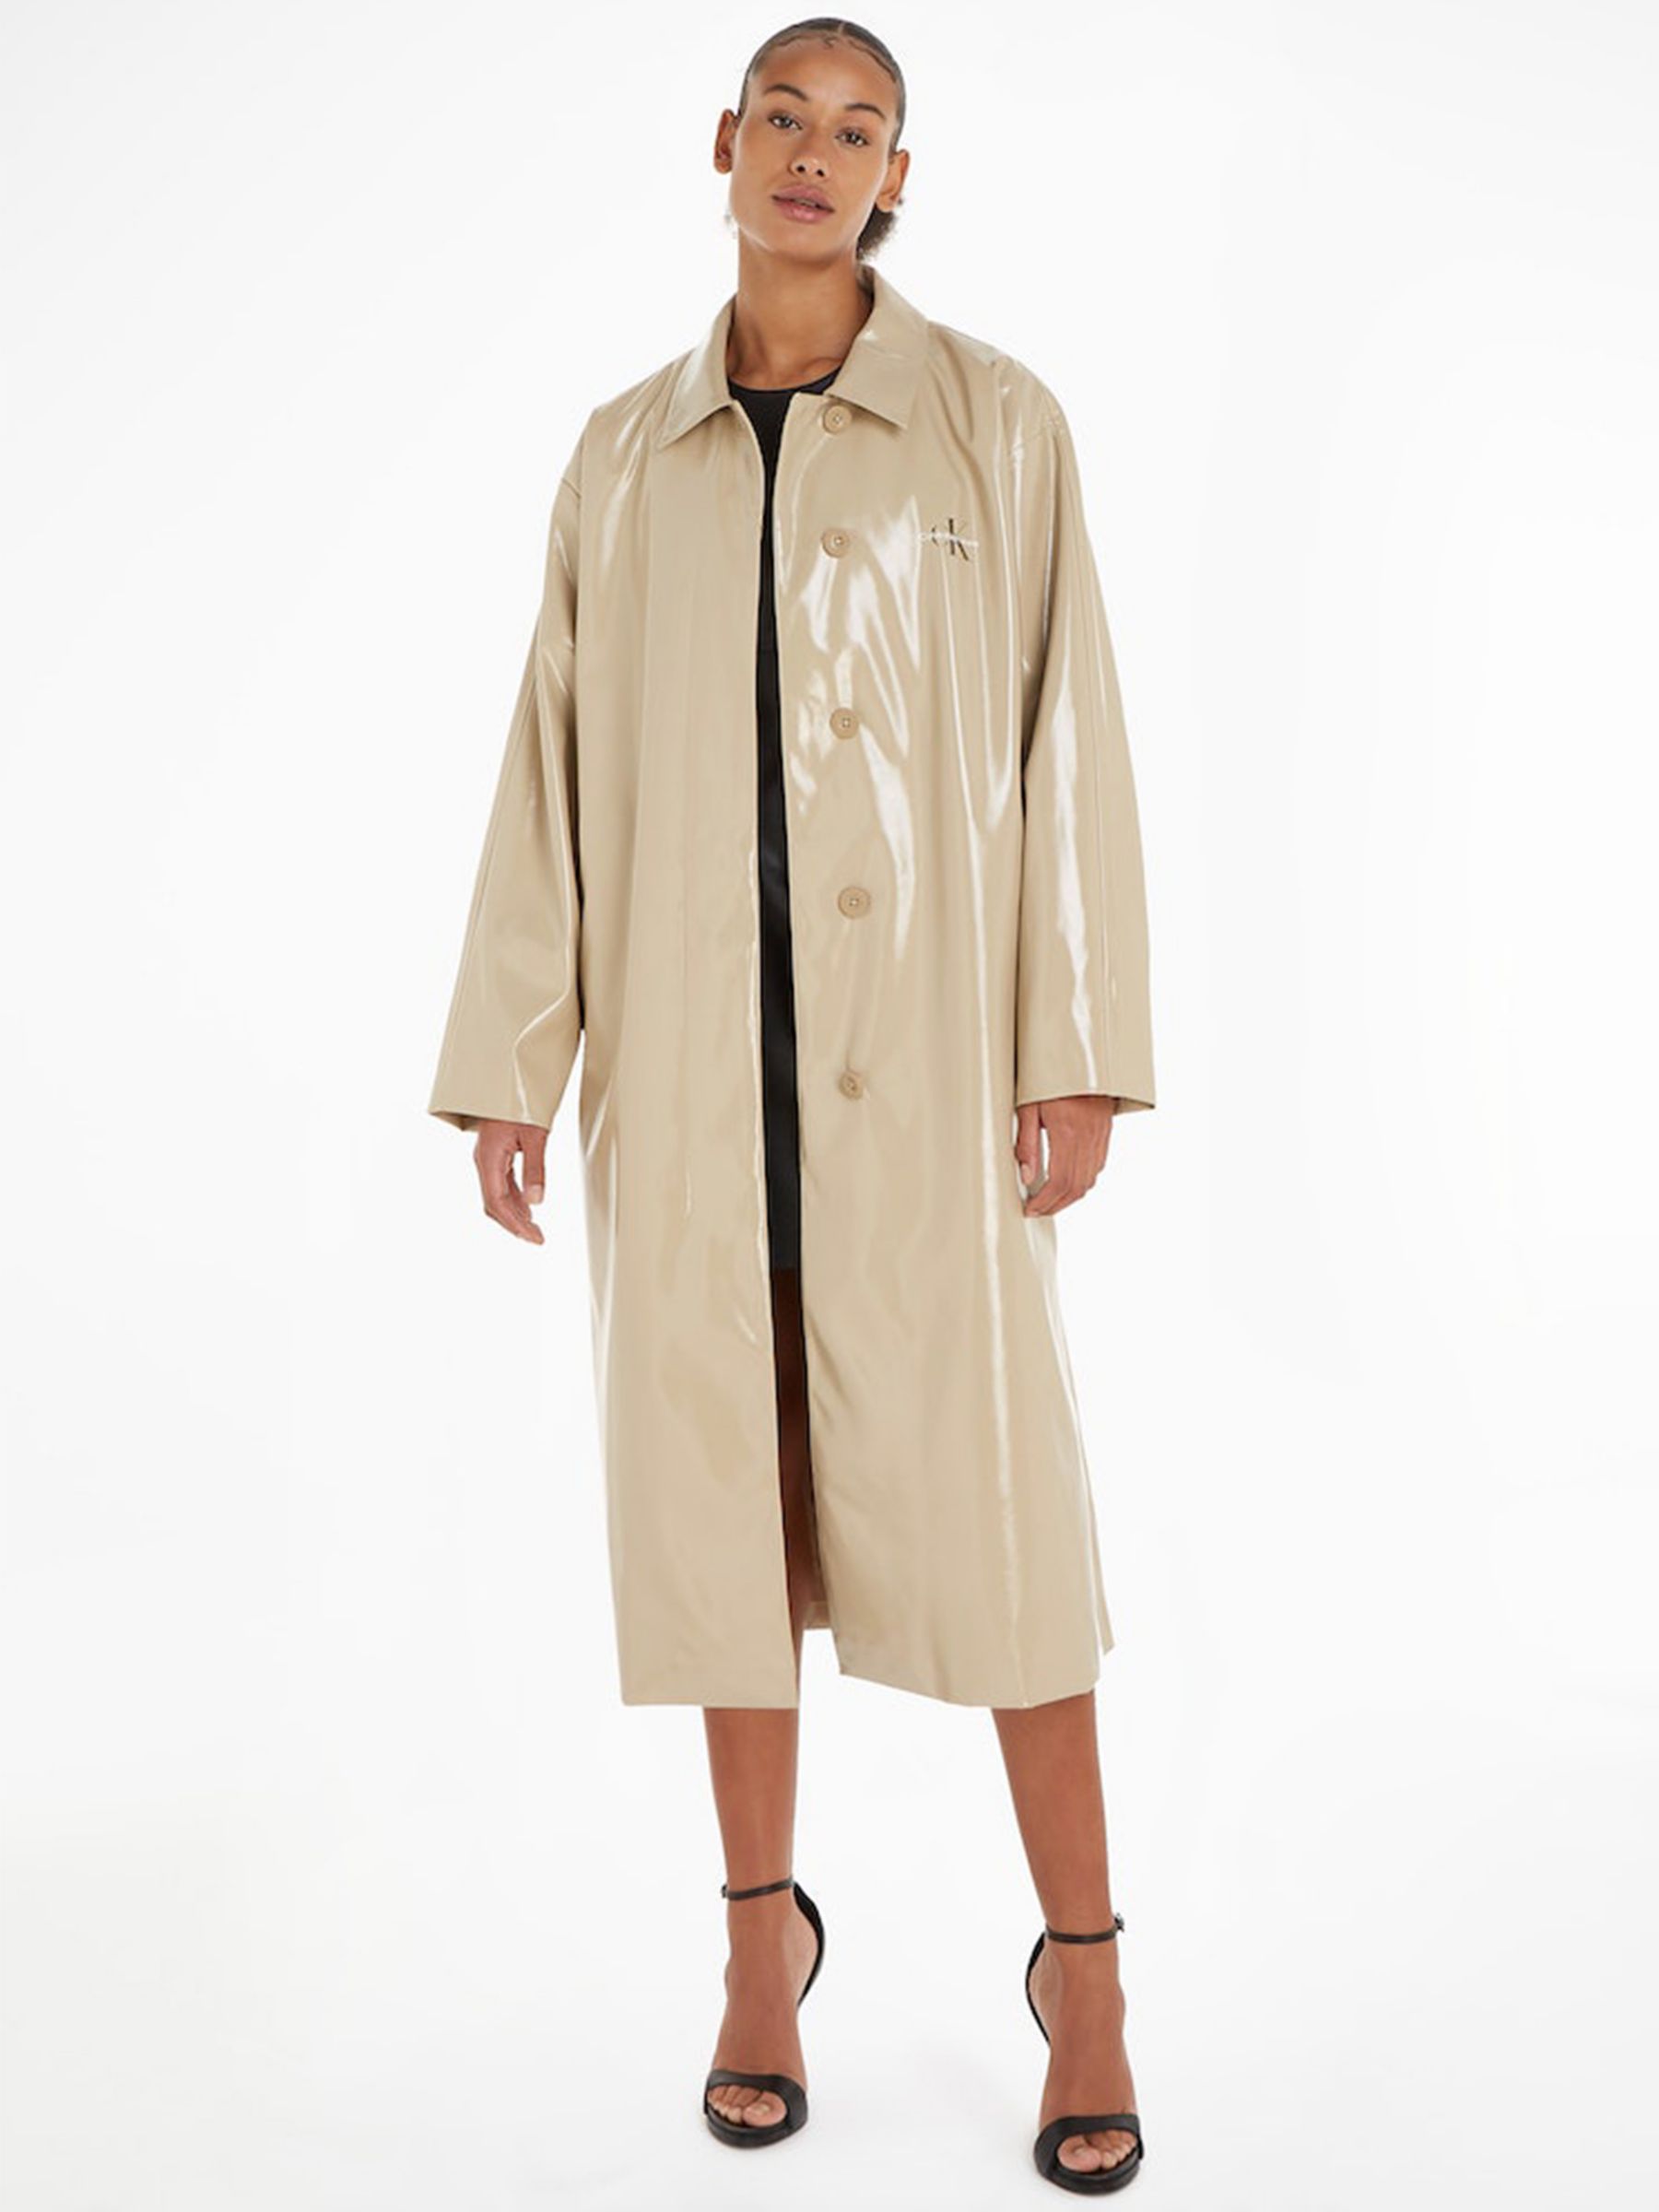 tekort porselein Ritmisch Women's Calvin Klein Coats & Jackets | John Lewis & Partners